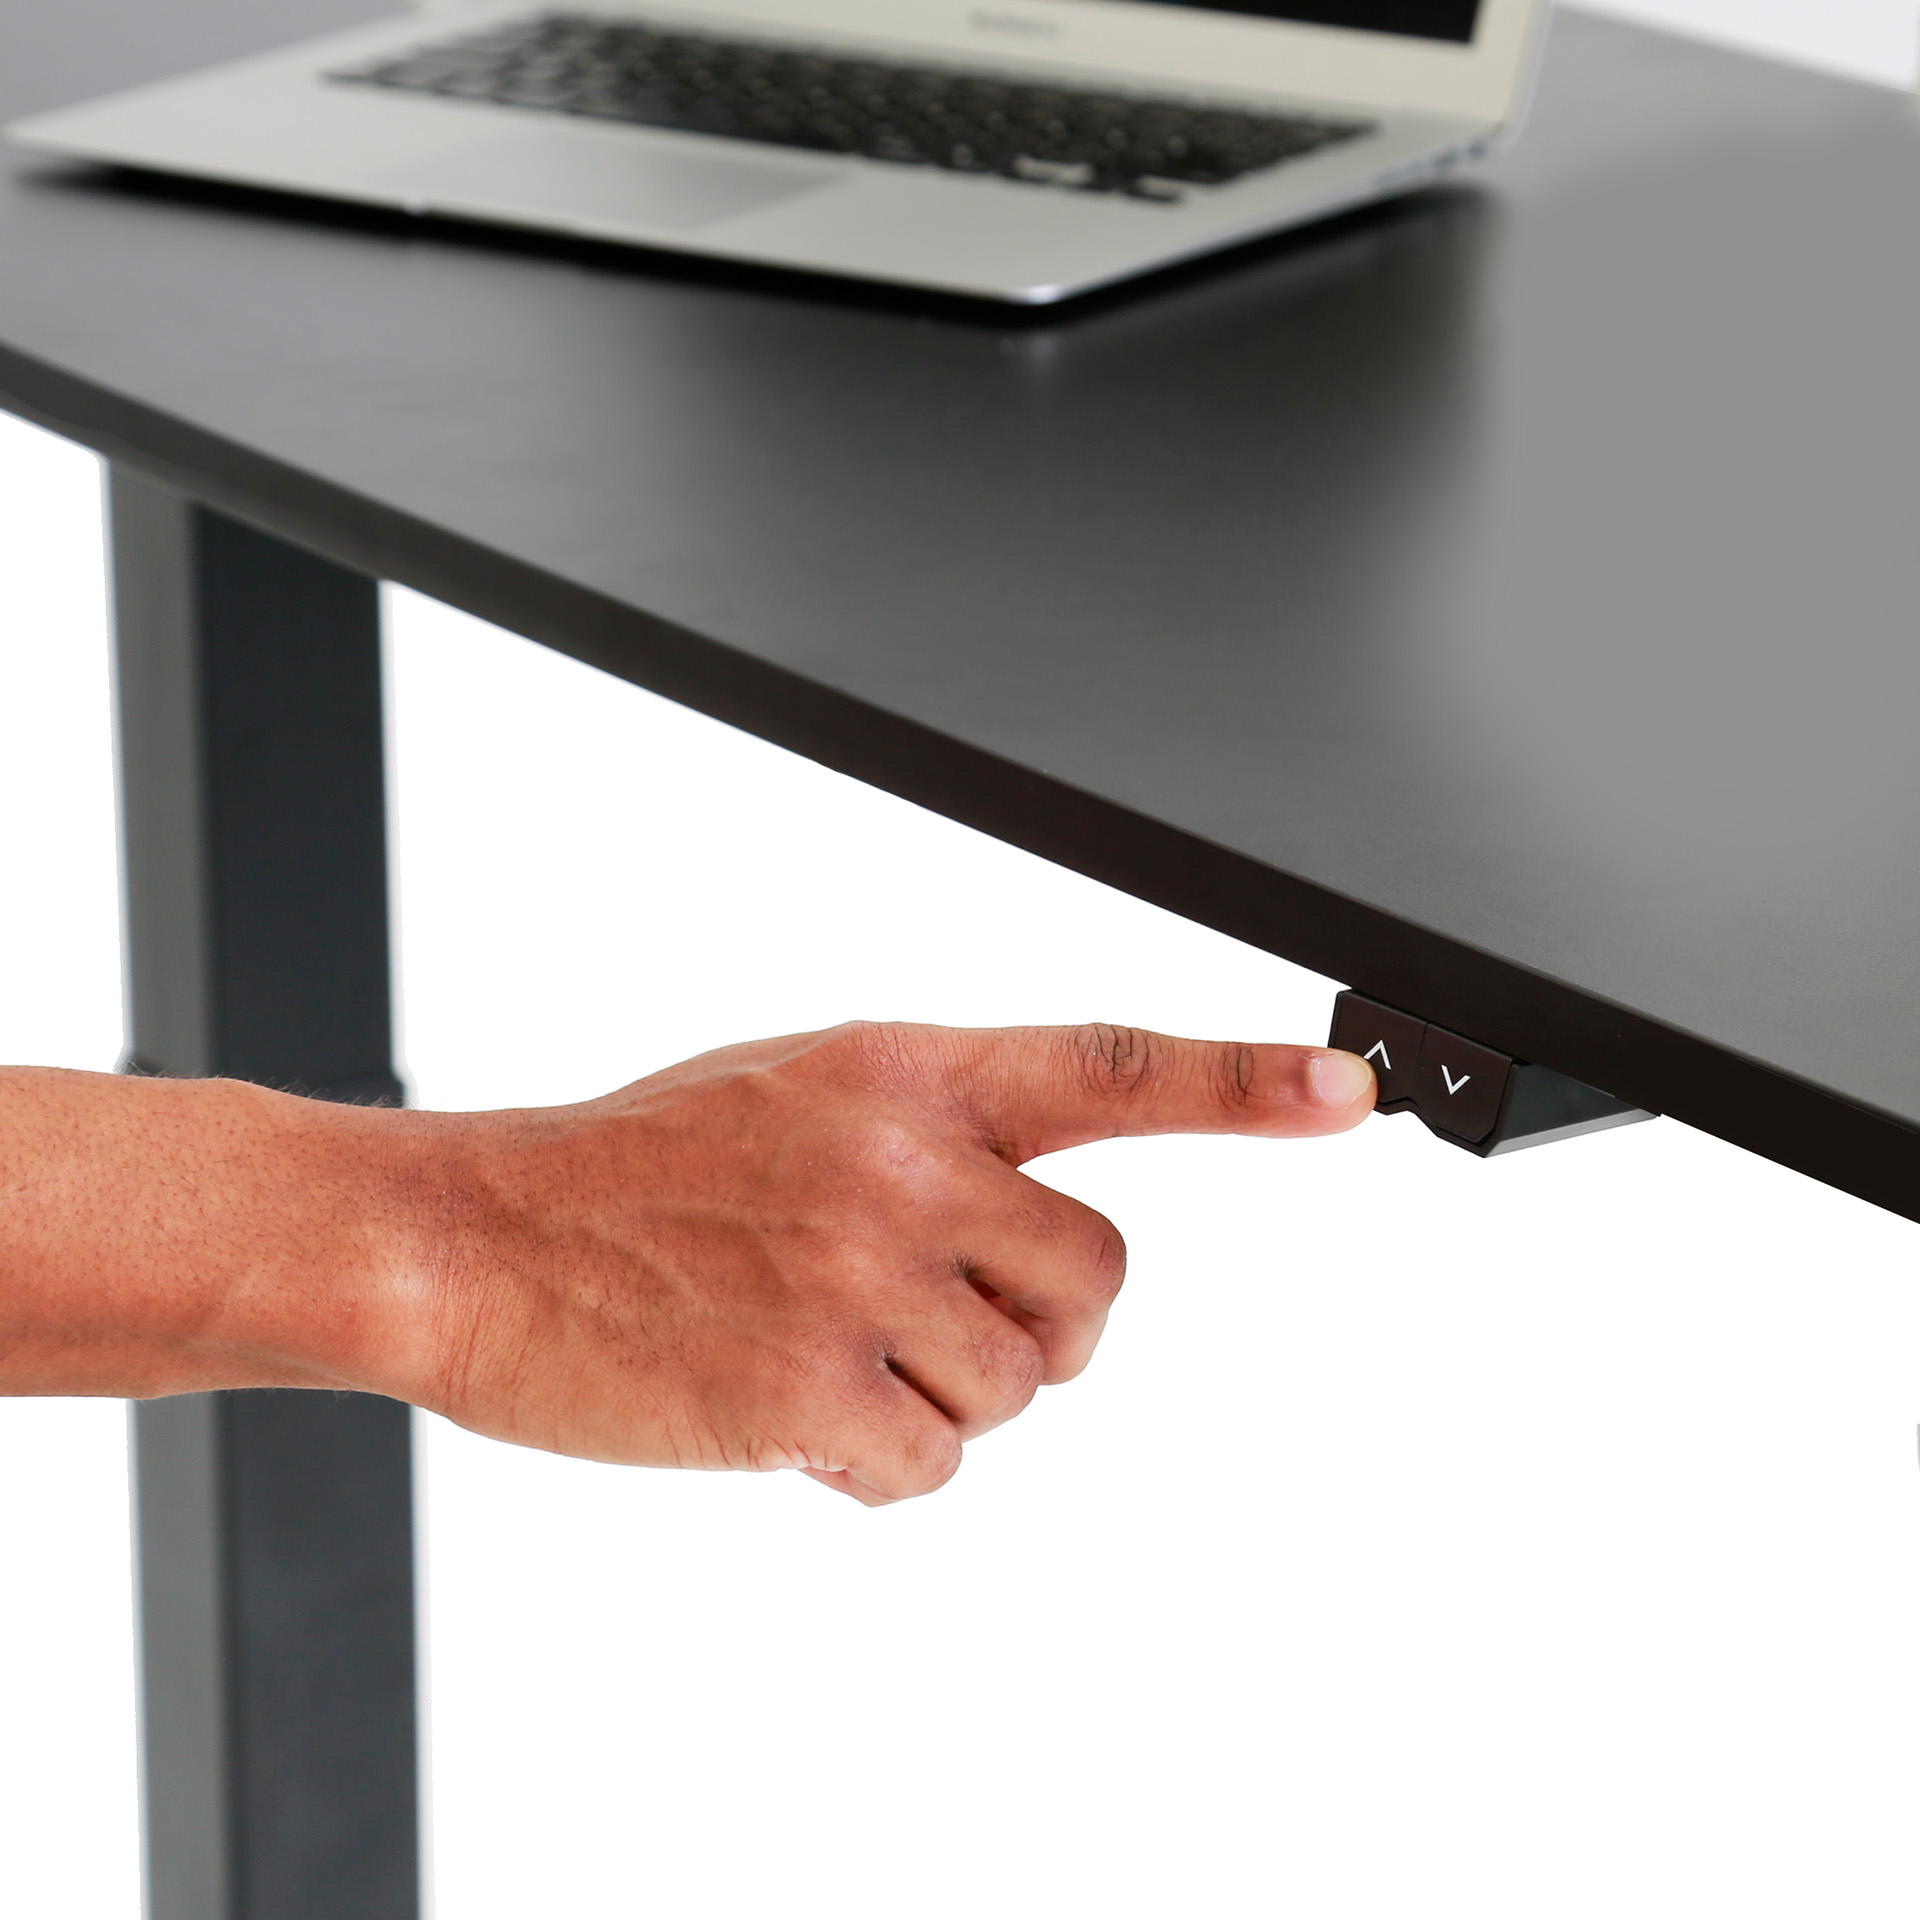 Tranzendesk 55 Side Crank Standing Desk - White - White Top / White Frame / White Shelf